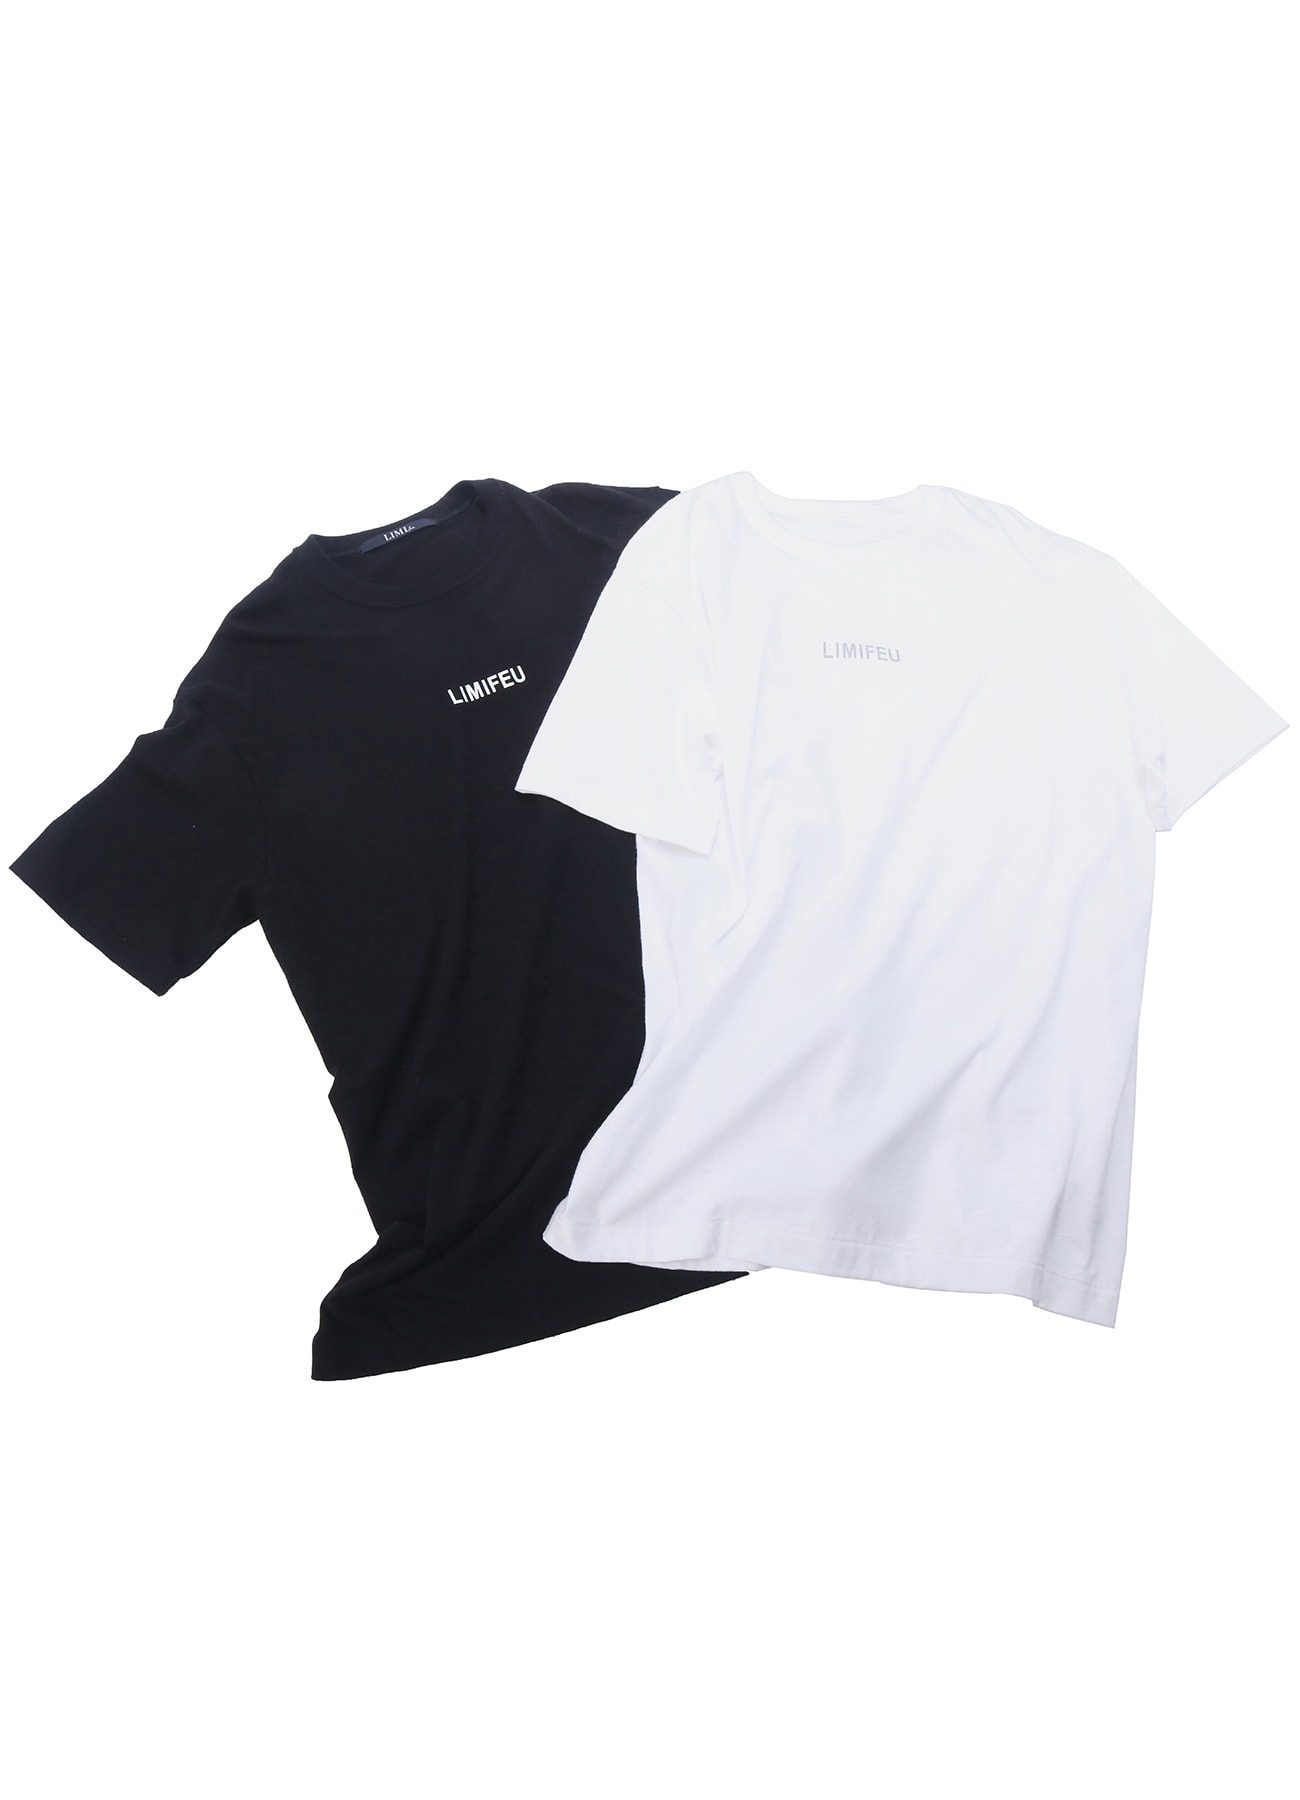 20/-Plain Stitch LIMI FEU Logo Print T-Shirt A